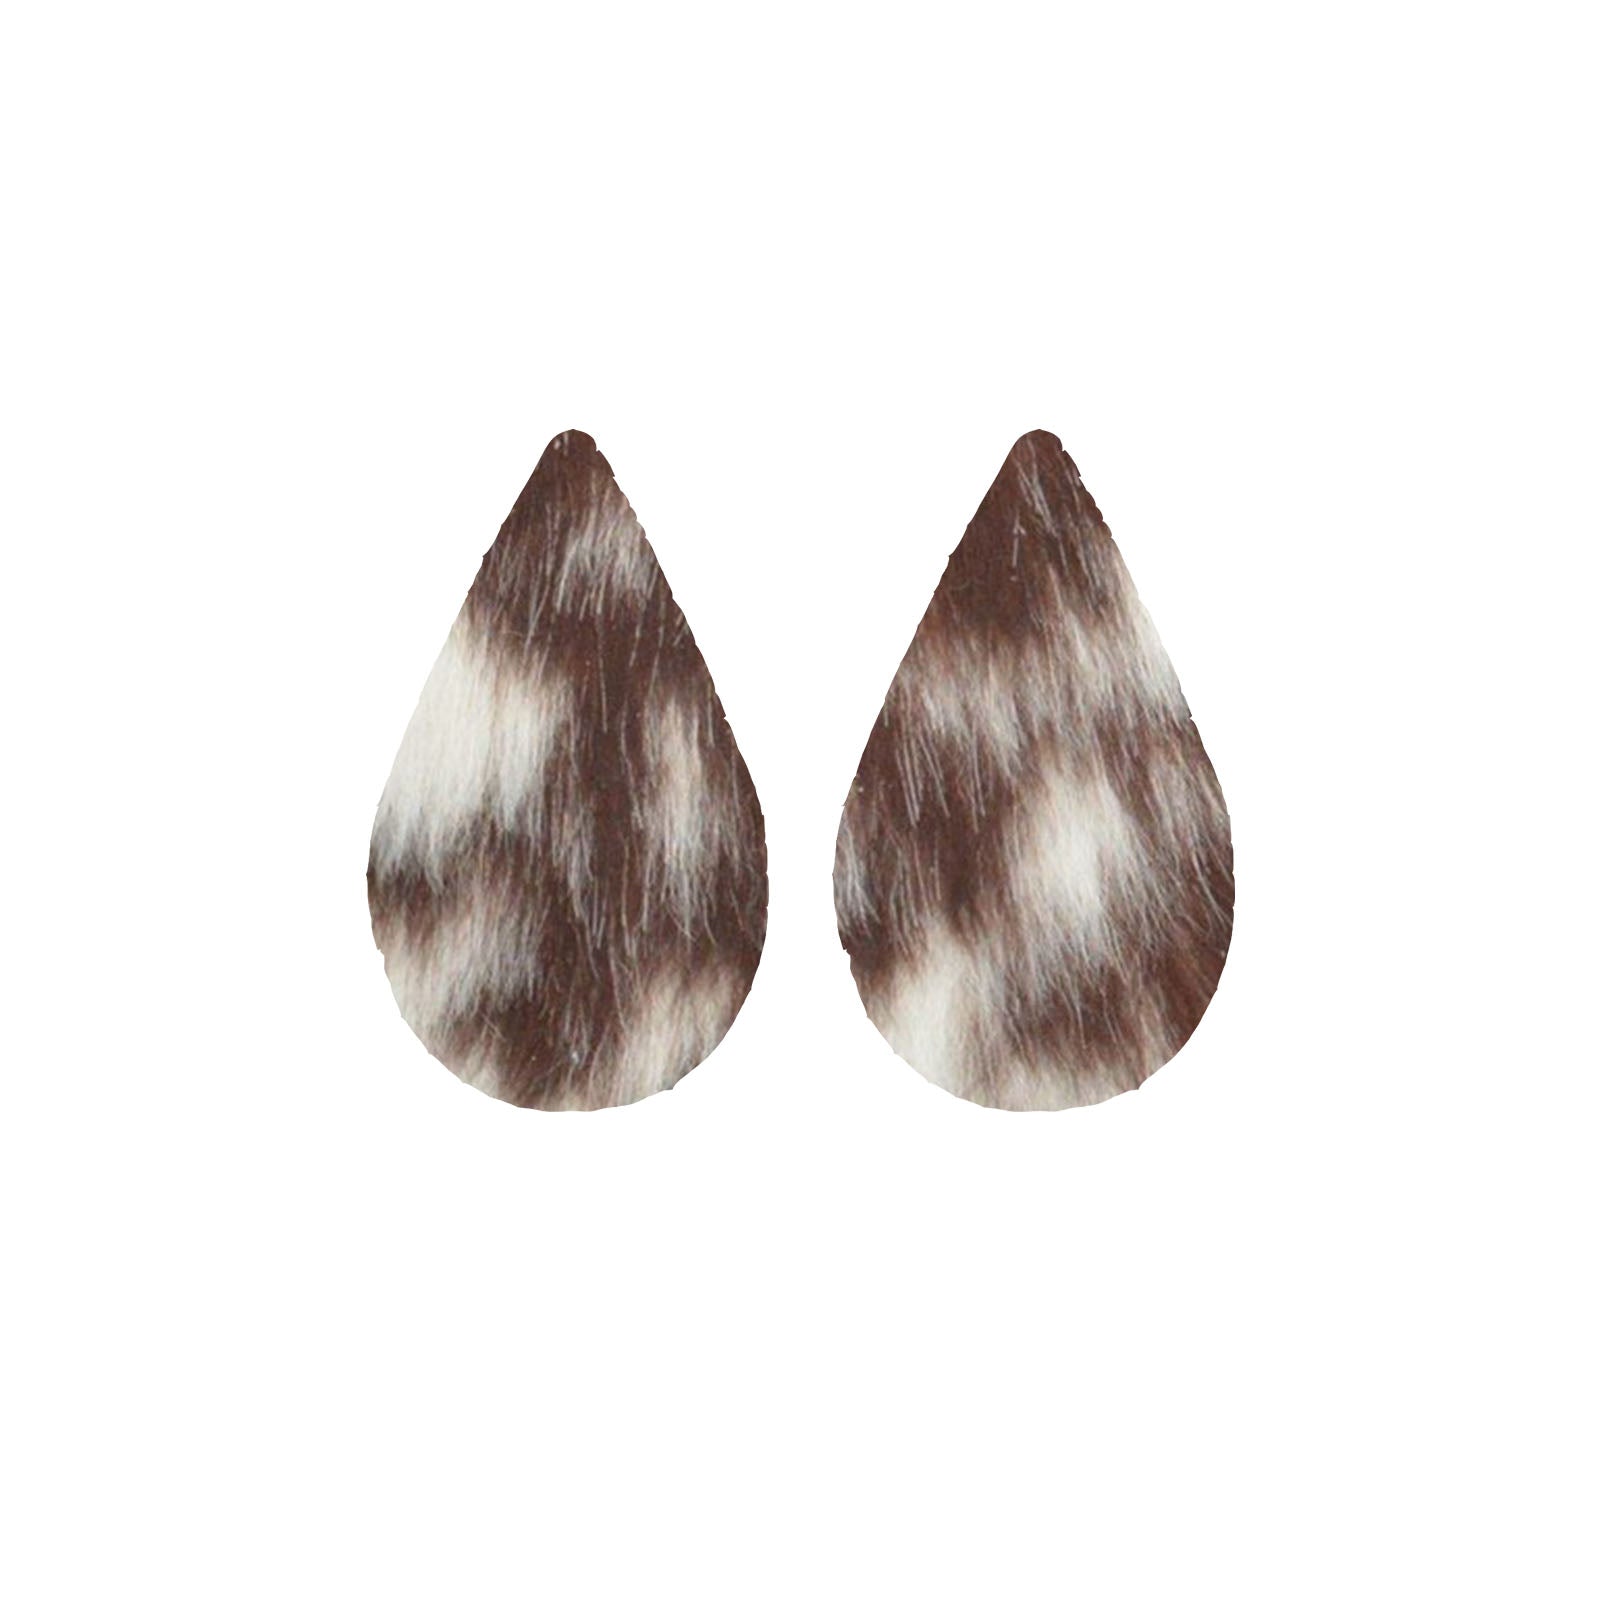 Bi-Color Medium Brown and Off-White Hair On Die Cut Earrings, Large Teardrop | The Leather Guy